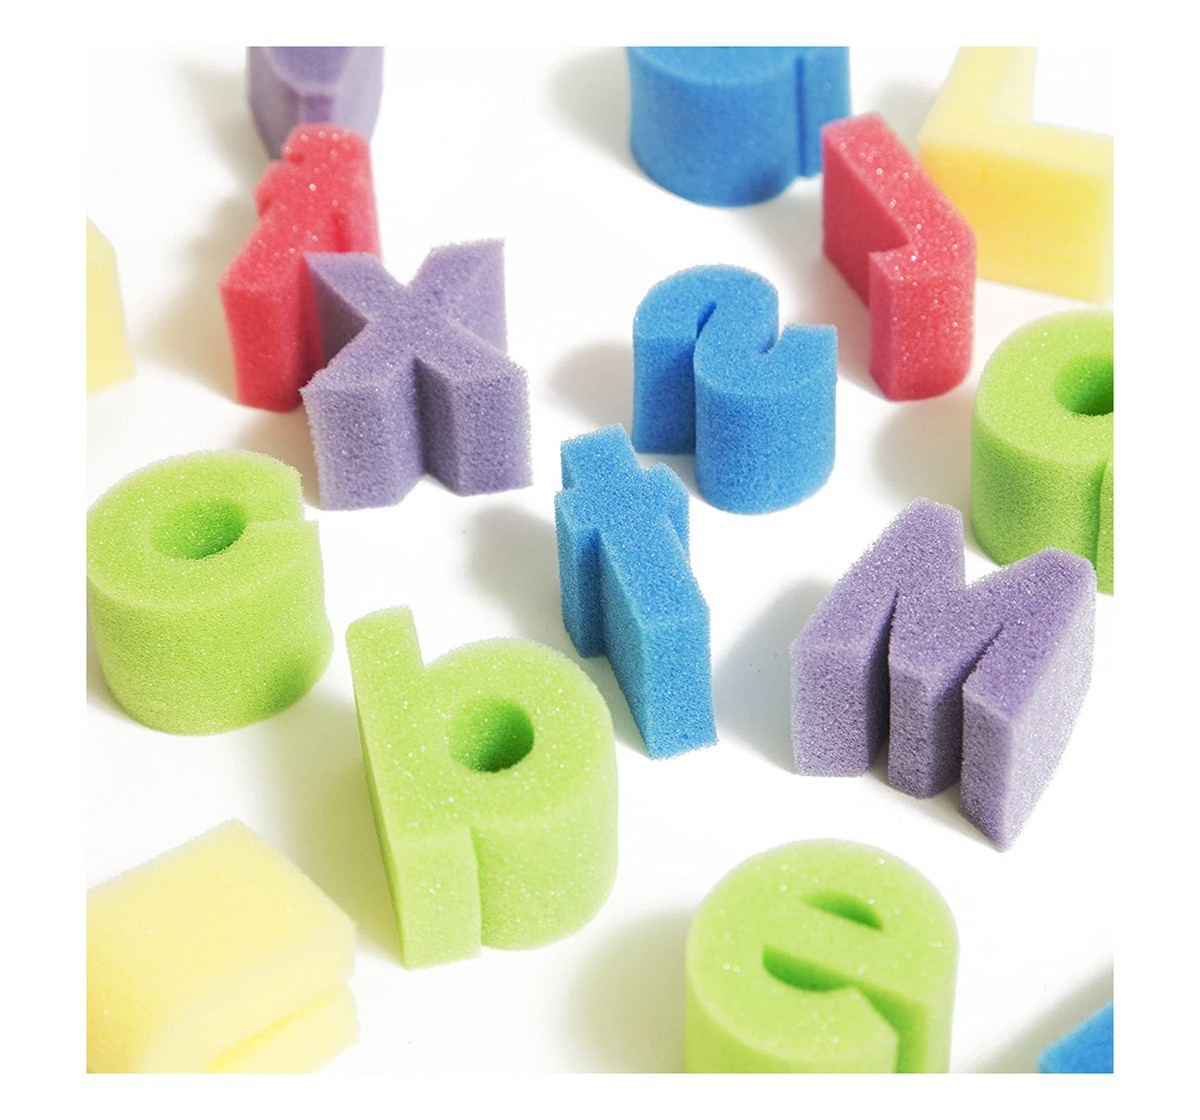 Hamleys Alphabet Sponges DIY Art & Craft Kits for Kids age 3Y+ 